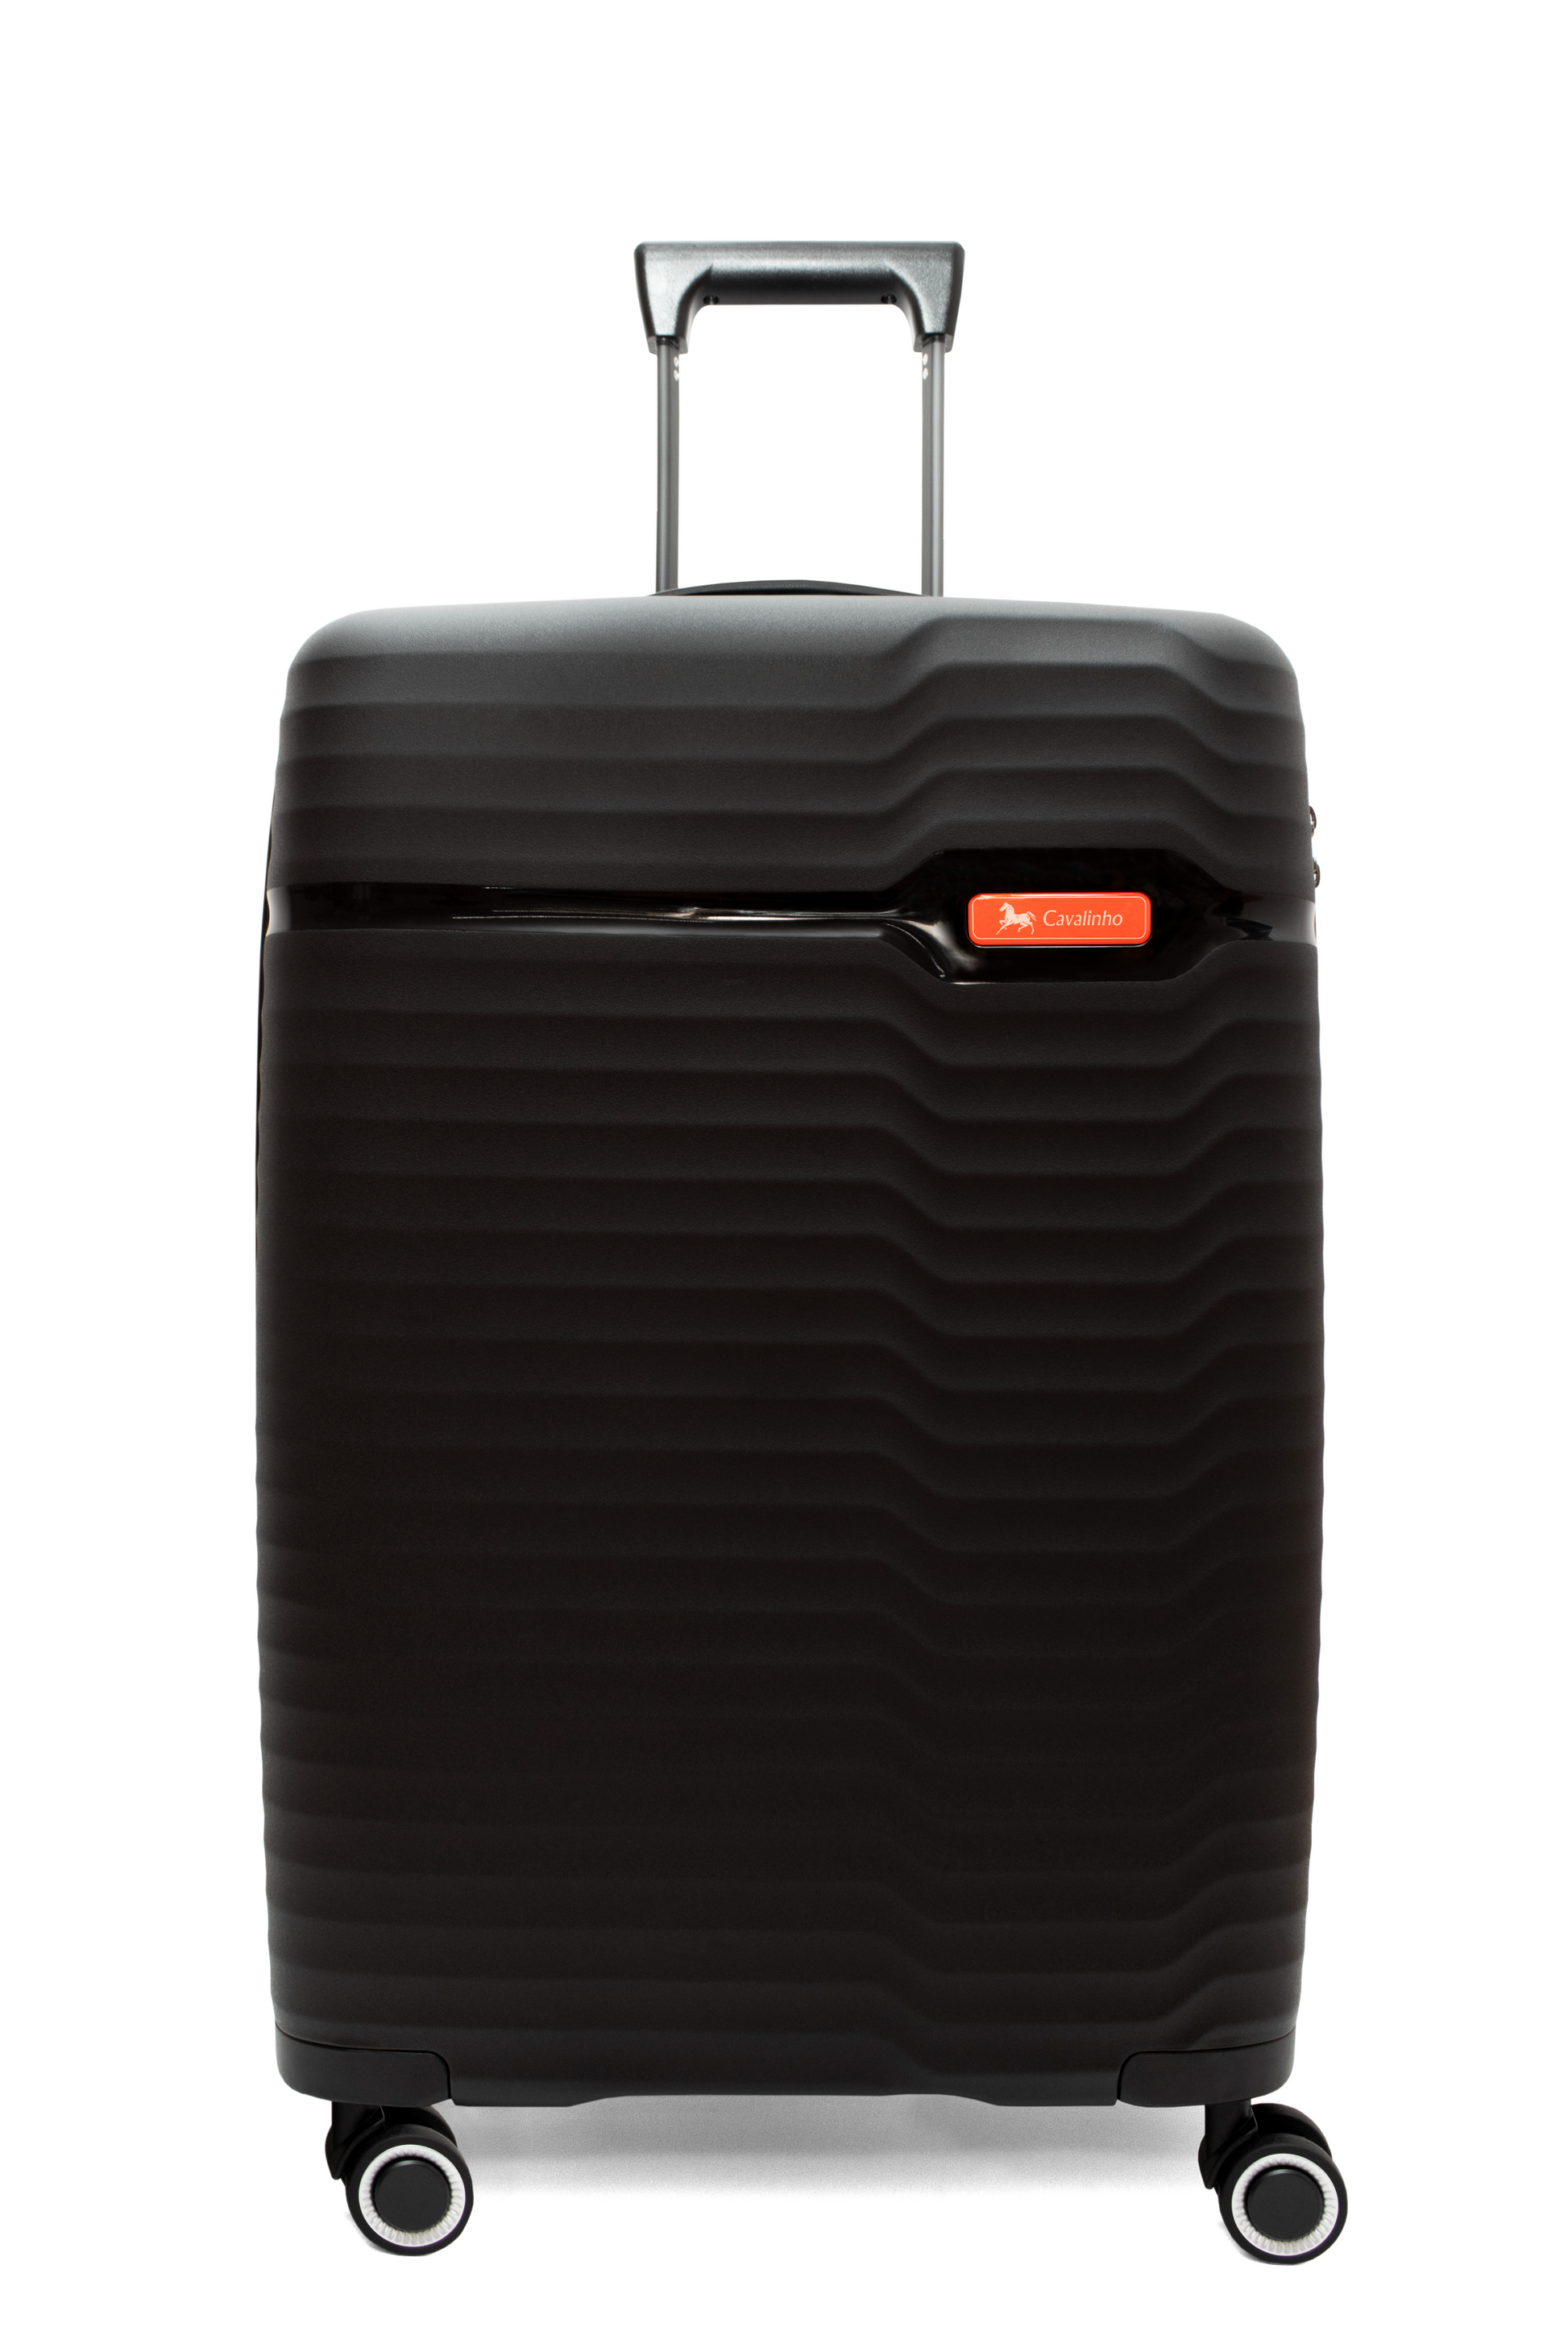 Cavalinho Check-in Hardside Luggage (24" or 28") - 24 inch Black - 68010003.01.24_1